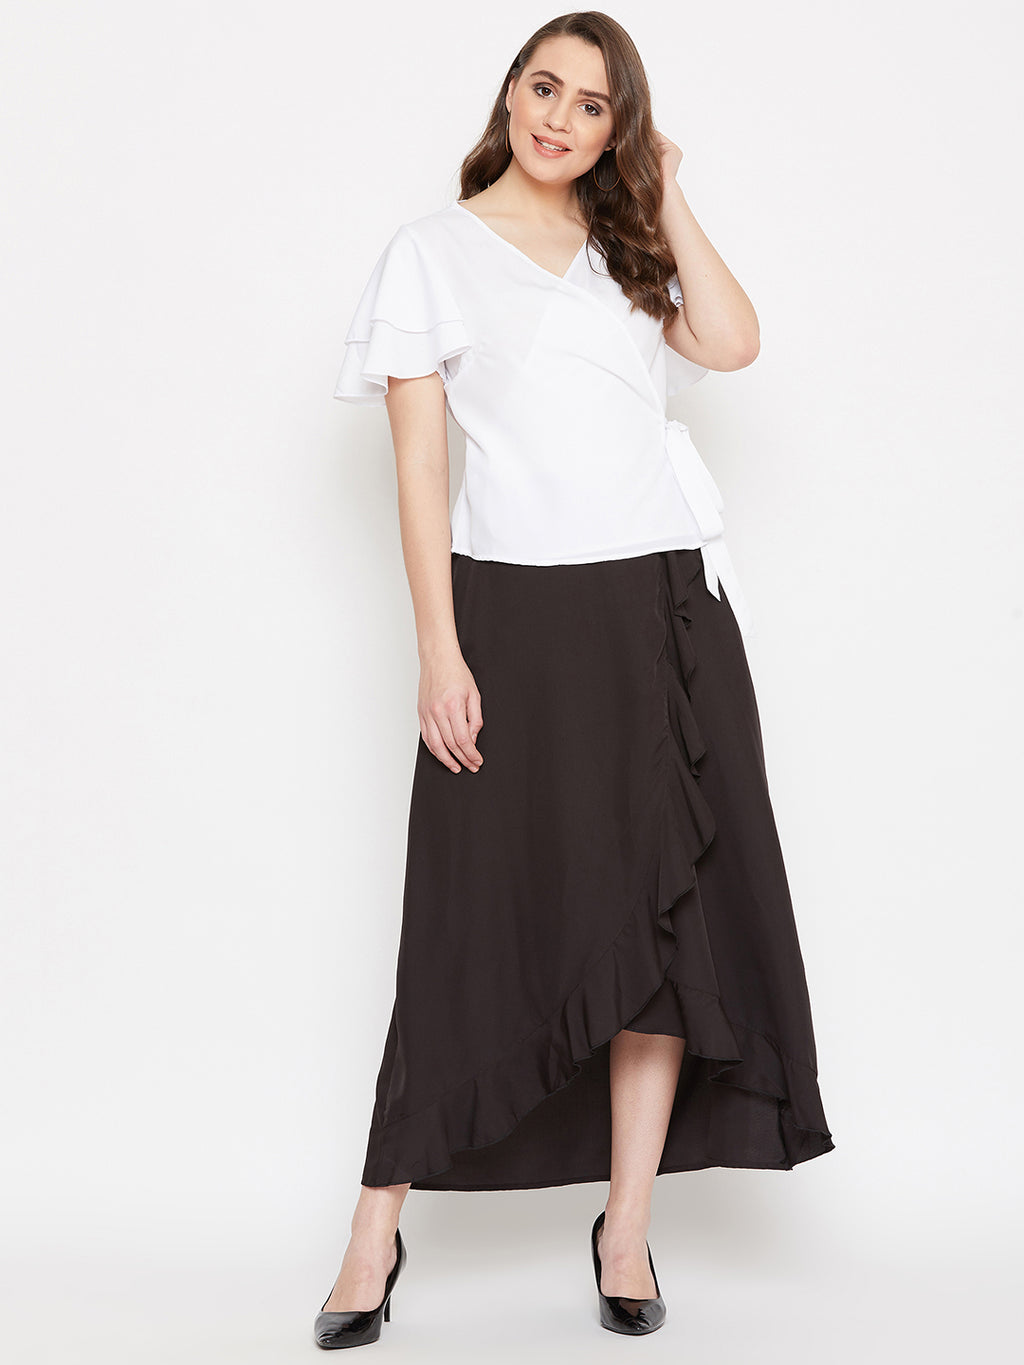 Overlap Top & Ruffle Skirt Set (Sku- BLMG20290).